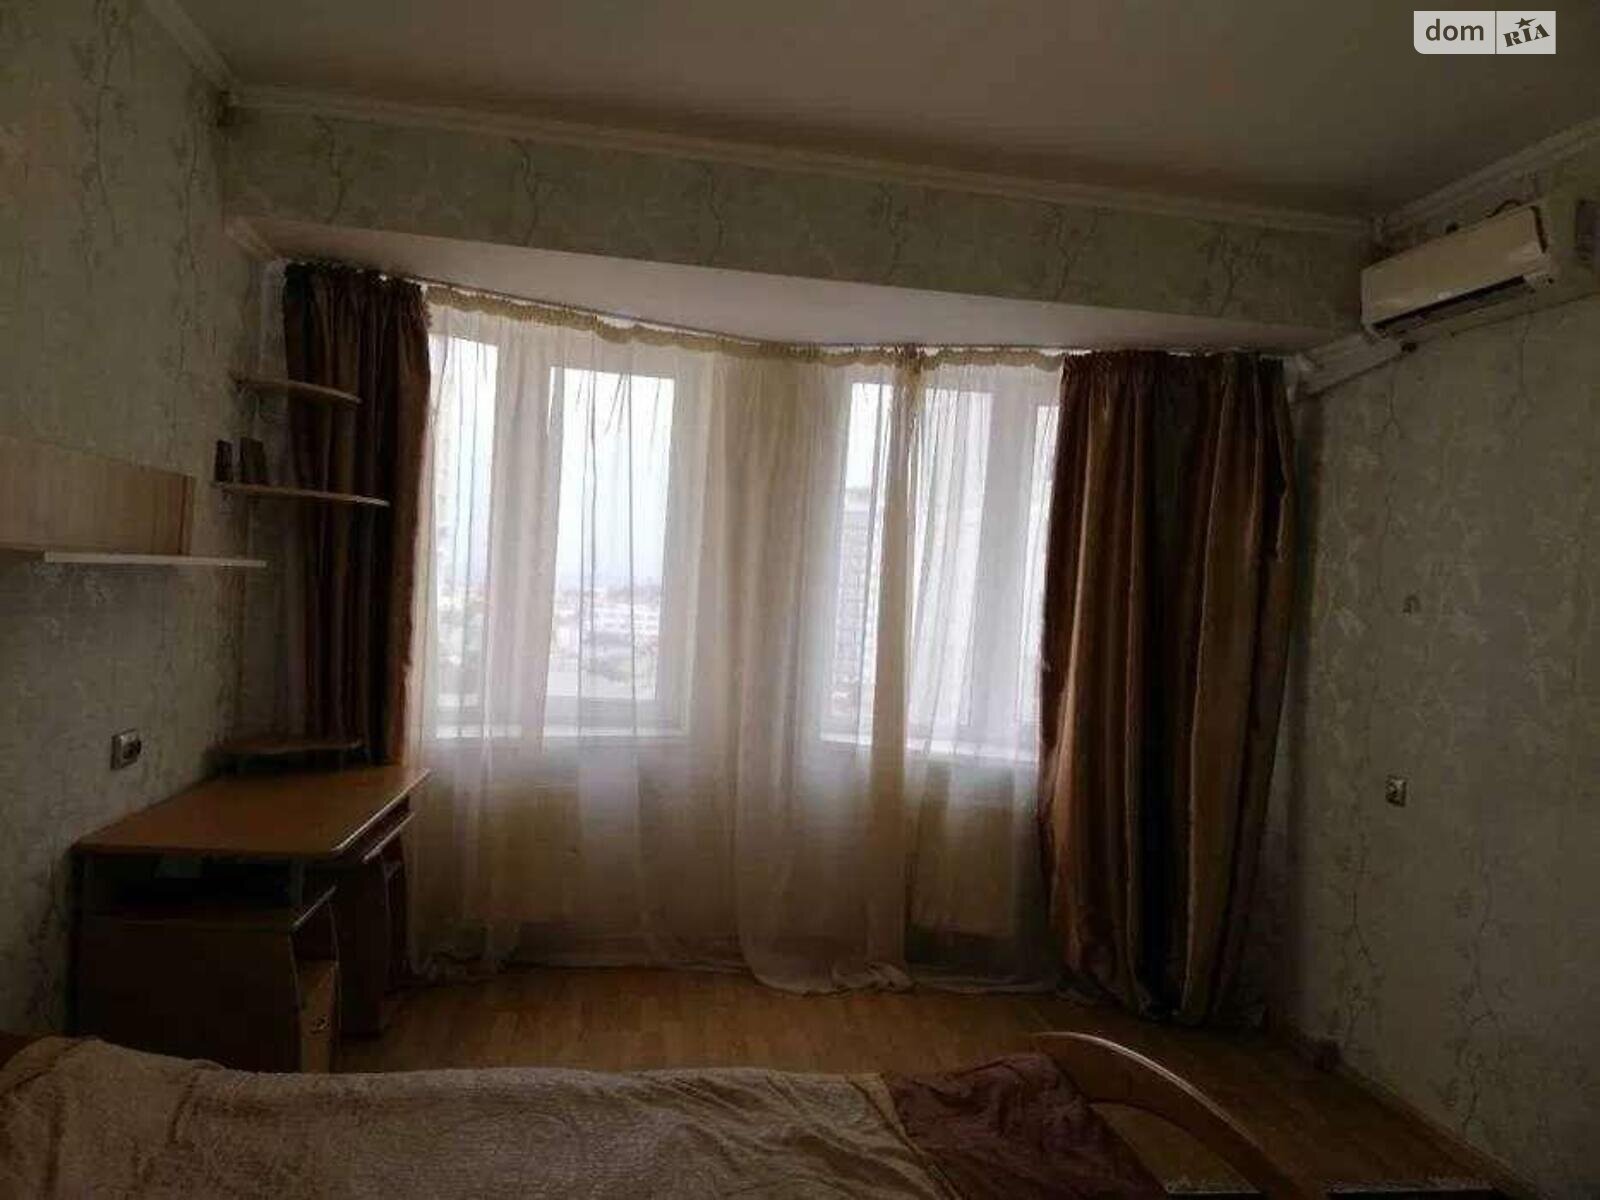 Продажа однокомнатной квартиры в Одессе, на ул. Академика Вильямса 59Е, район Таирова фото 1